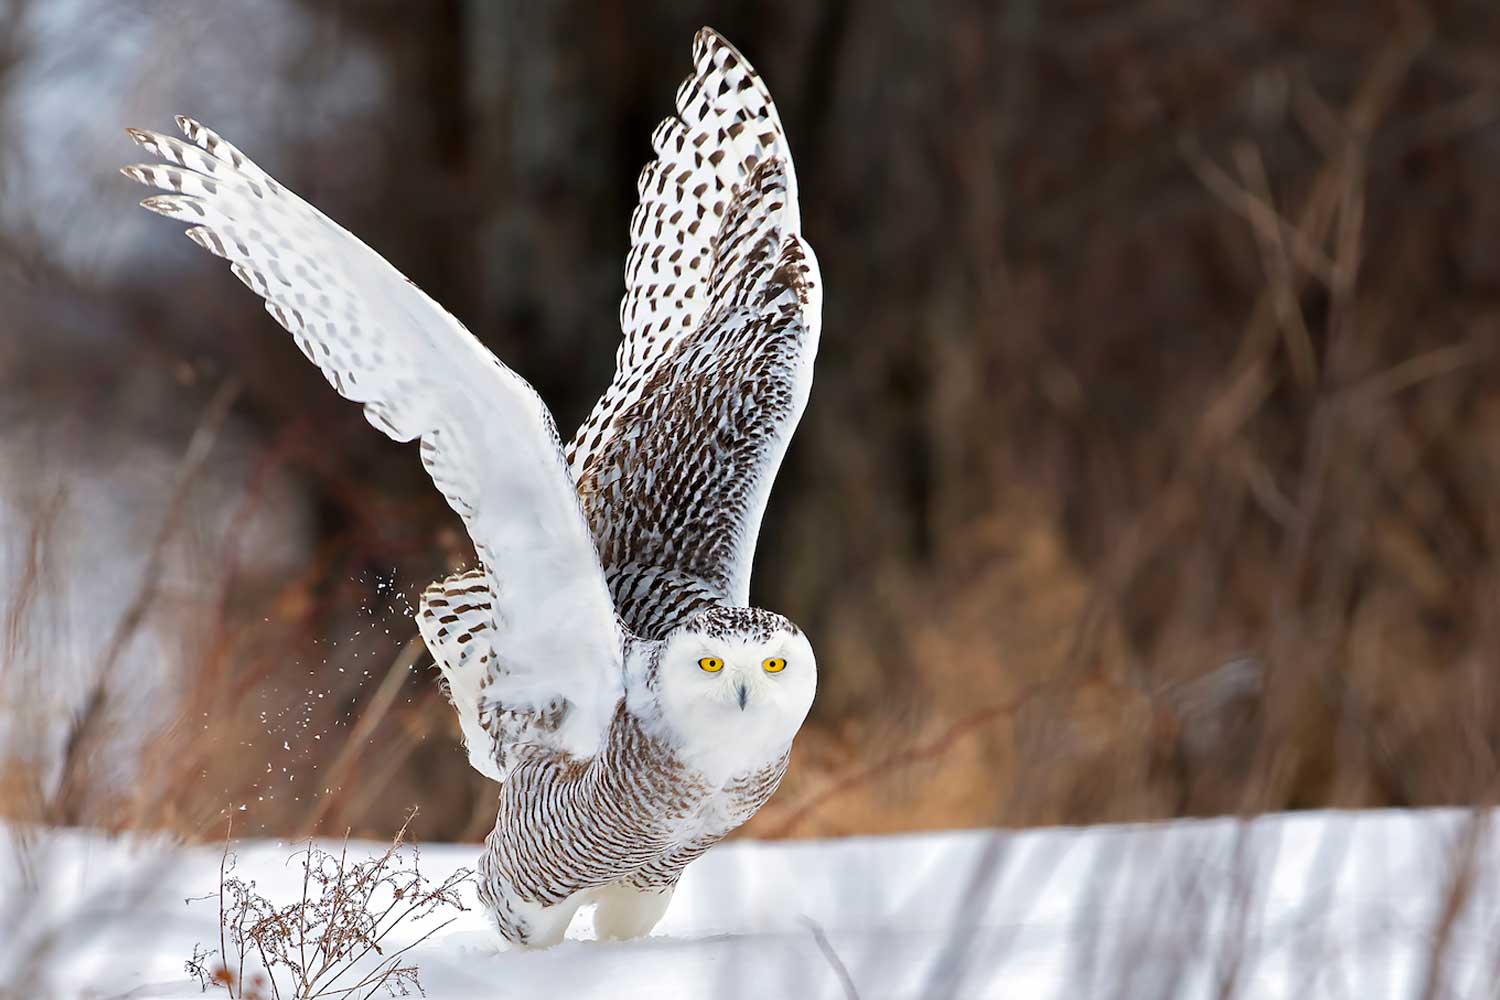 Snowy owl taking off near the ground.